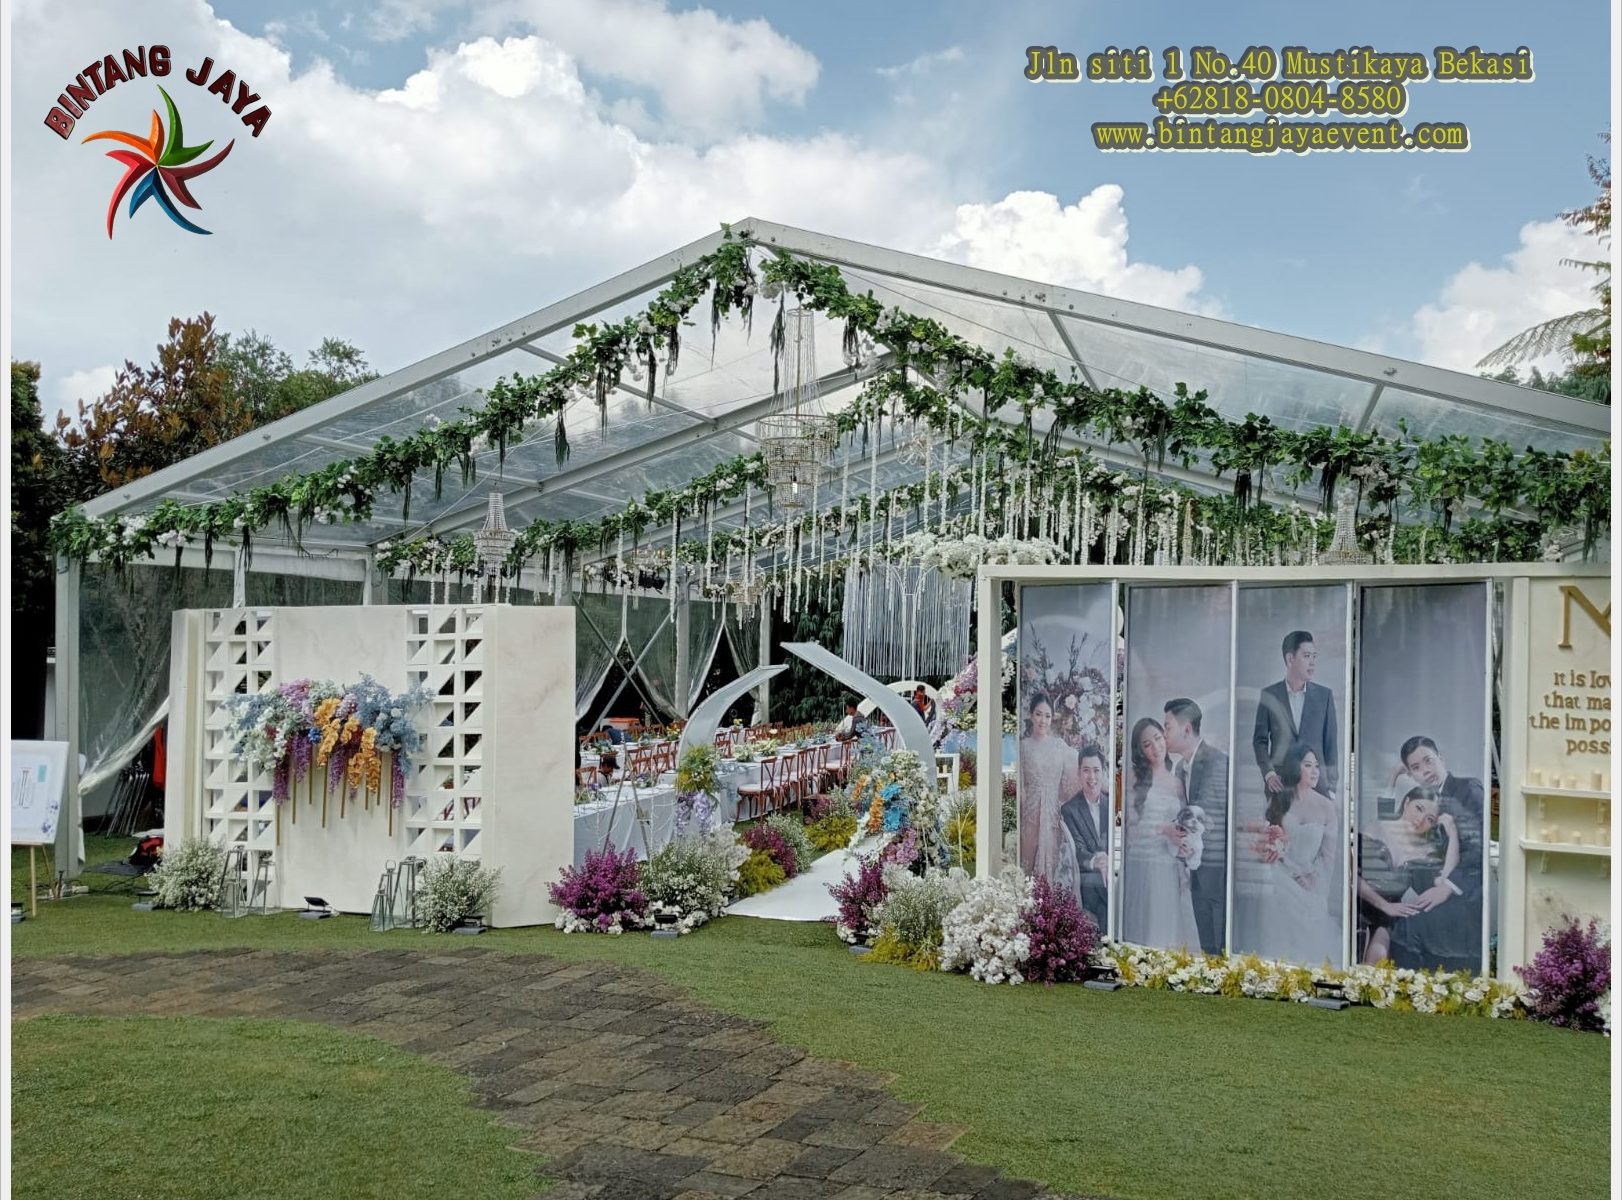 Sewa Dekorasi Wedding Outdoor Event Amaryllis